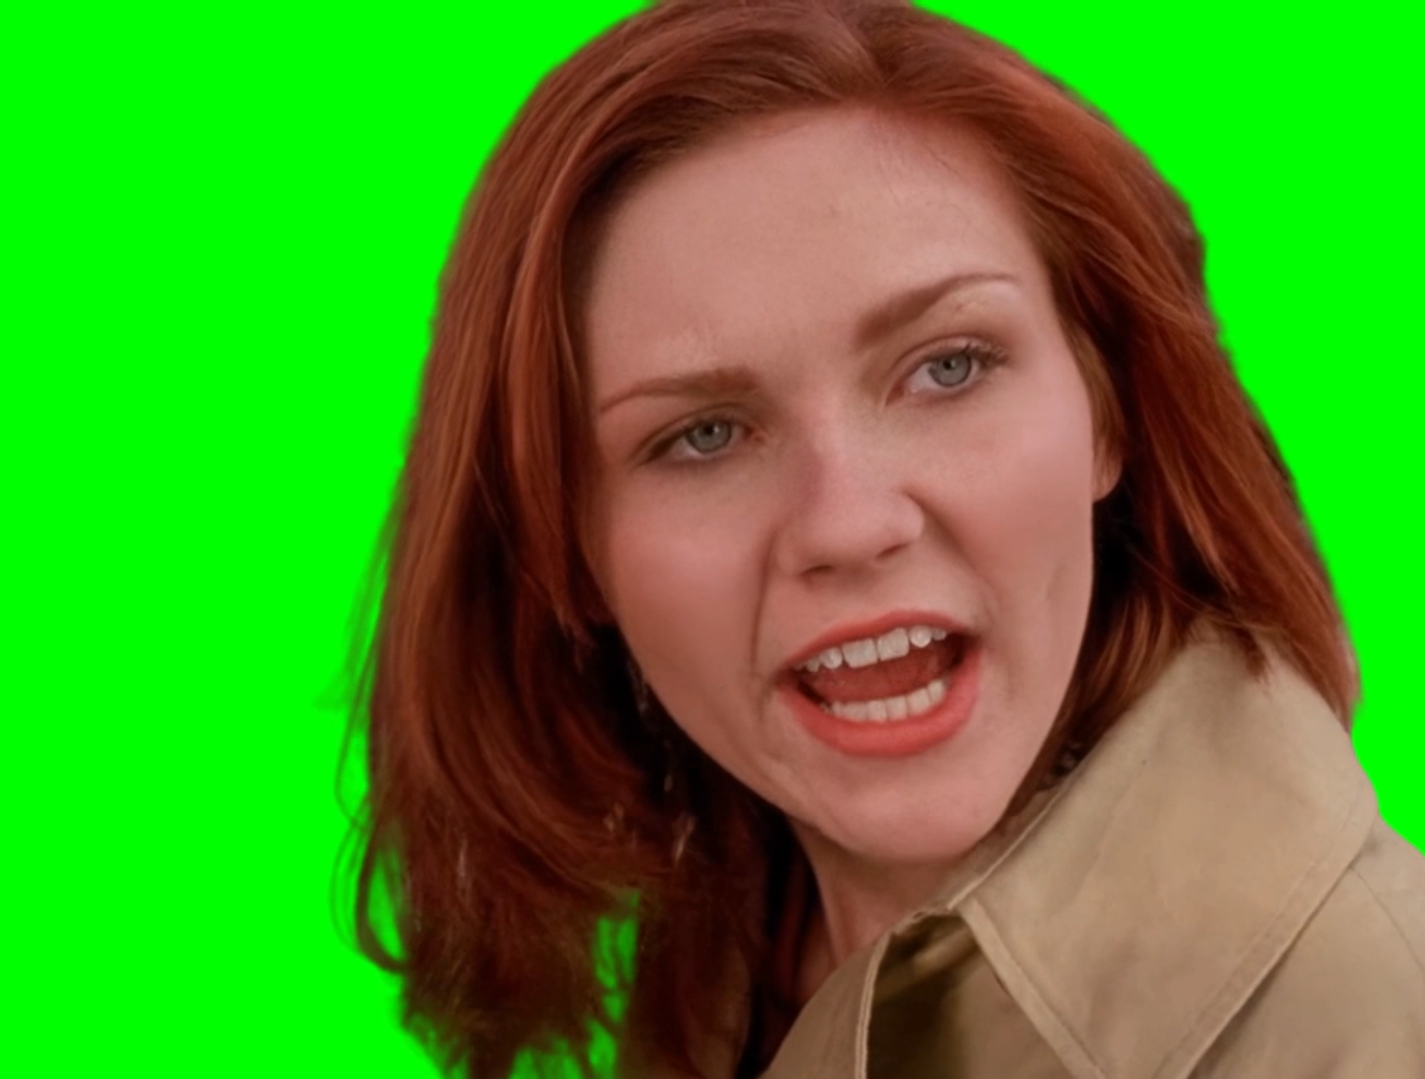 Mary Jane defending Peter Parker meme - Spider-Man (2002) movie (Green Screen)